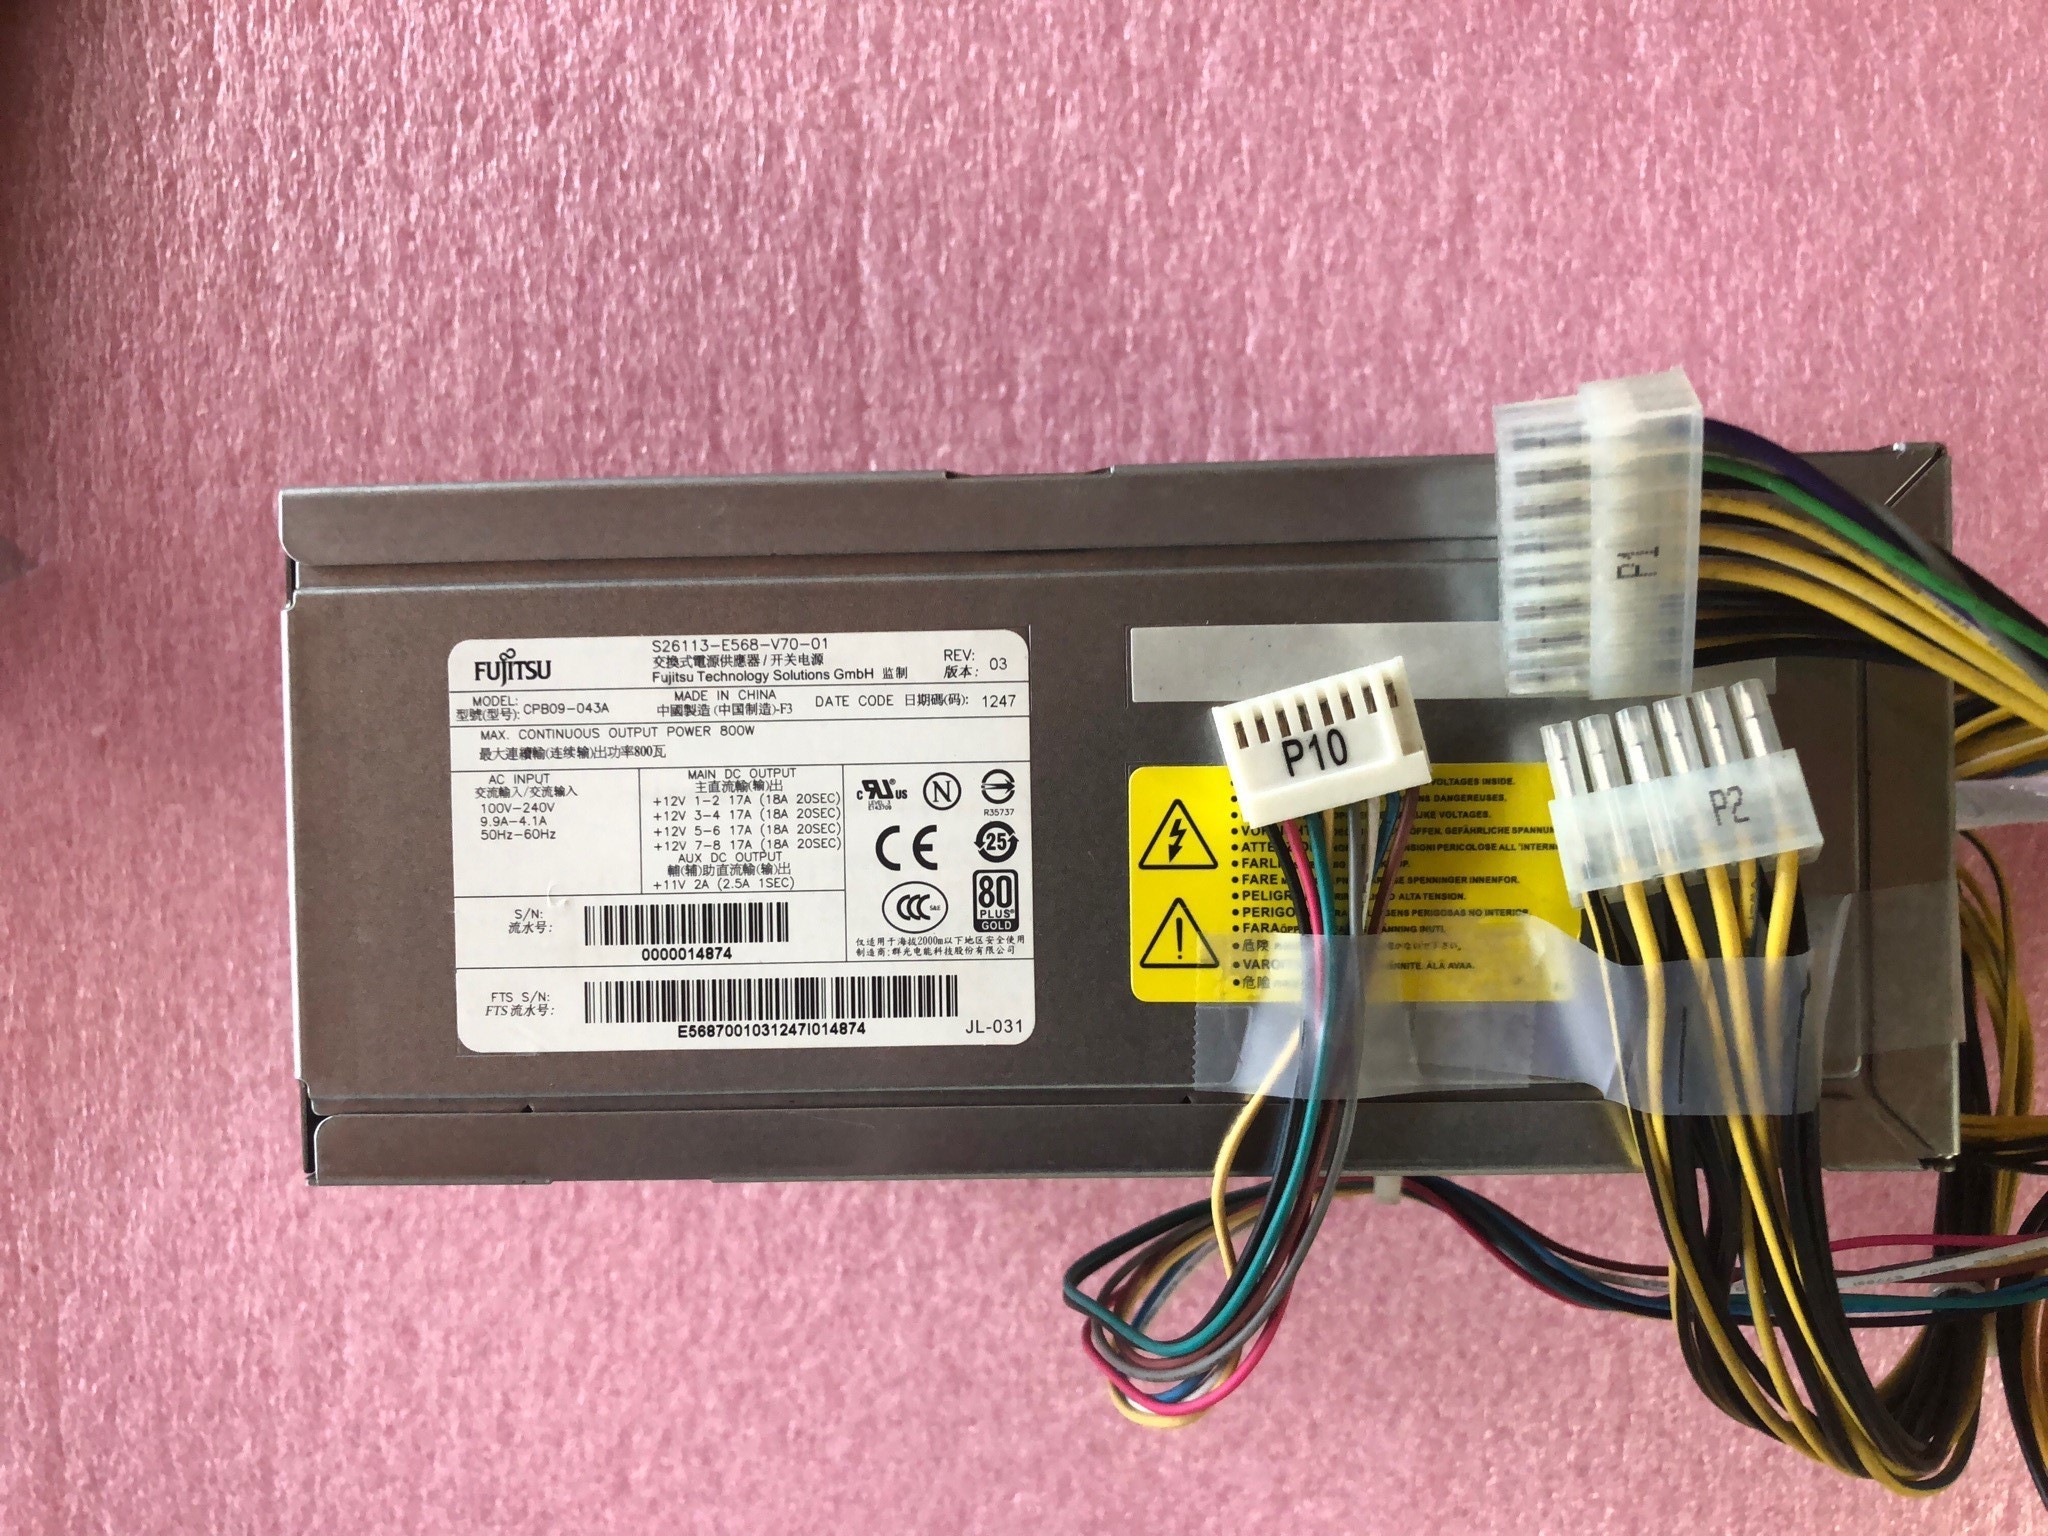 Fujitsu CPB09-043A 800 watt power supply